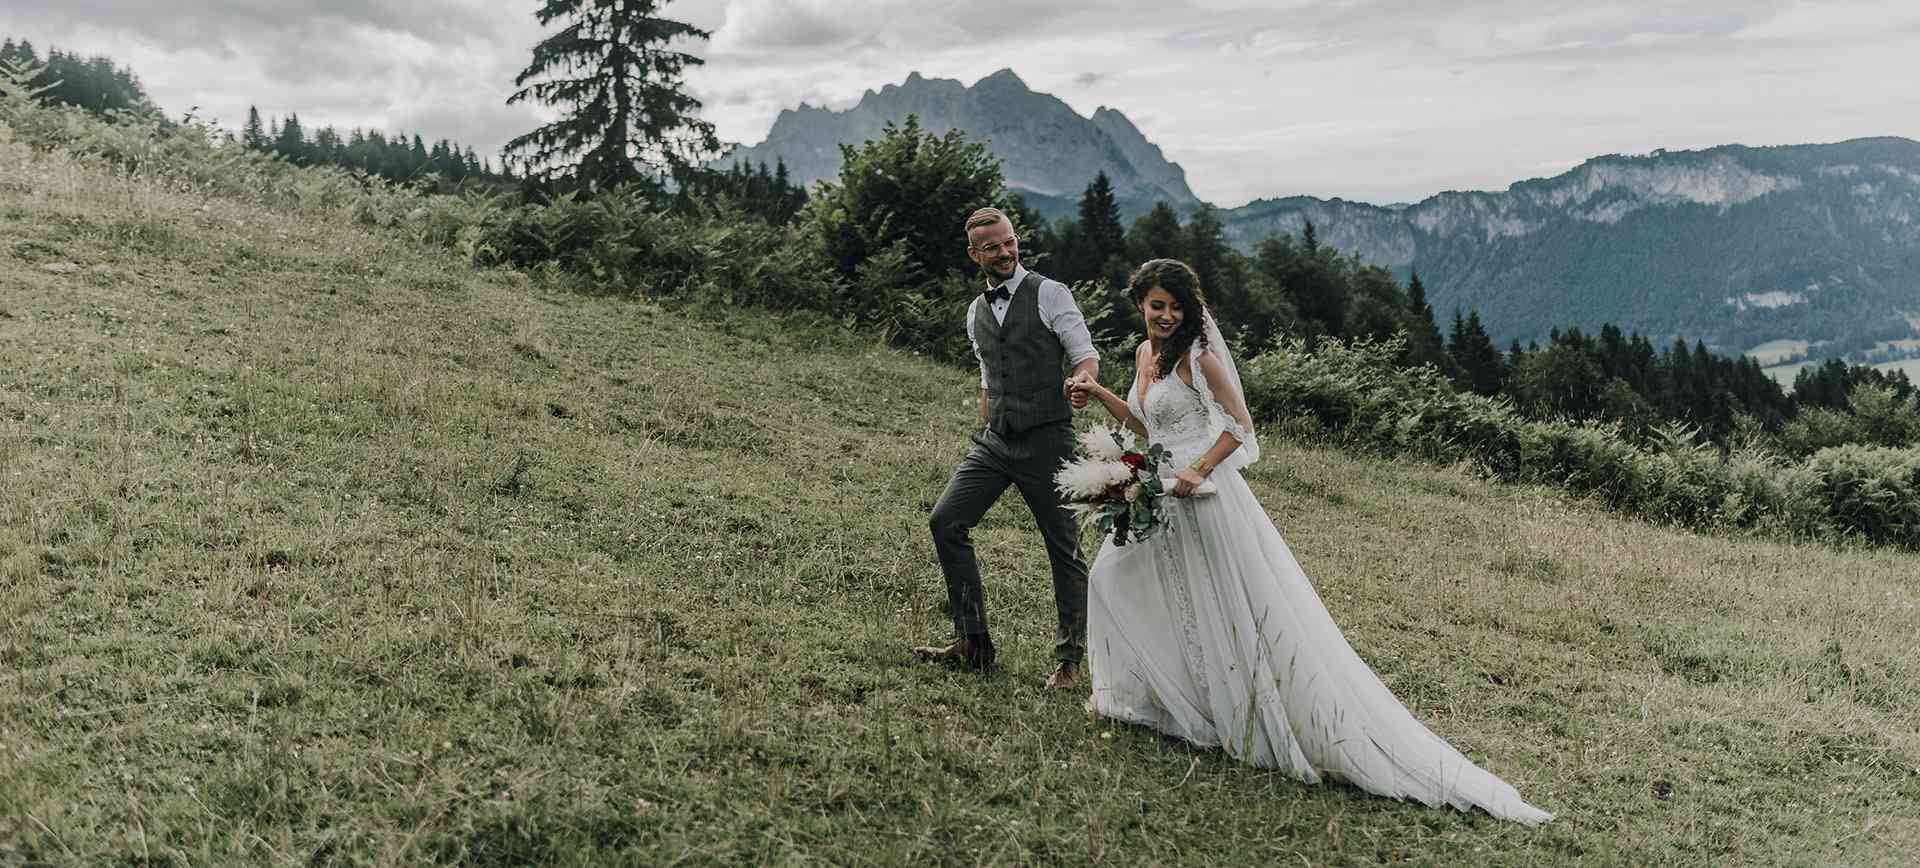 mountain elopement packages austria